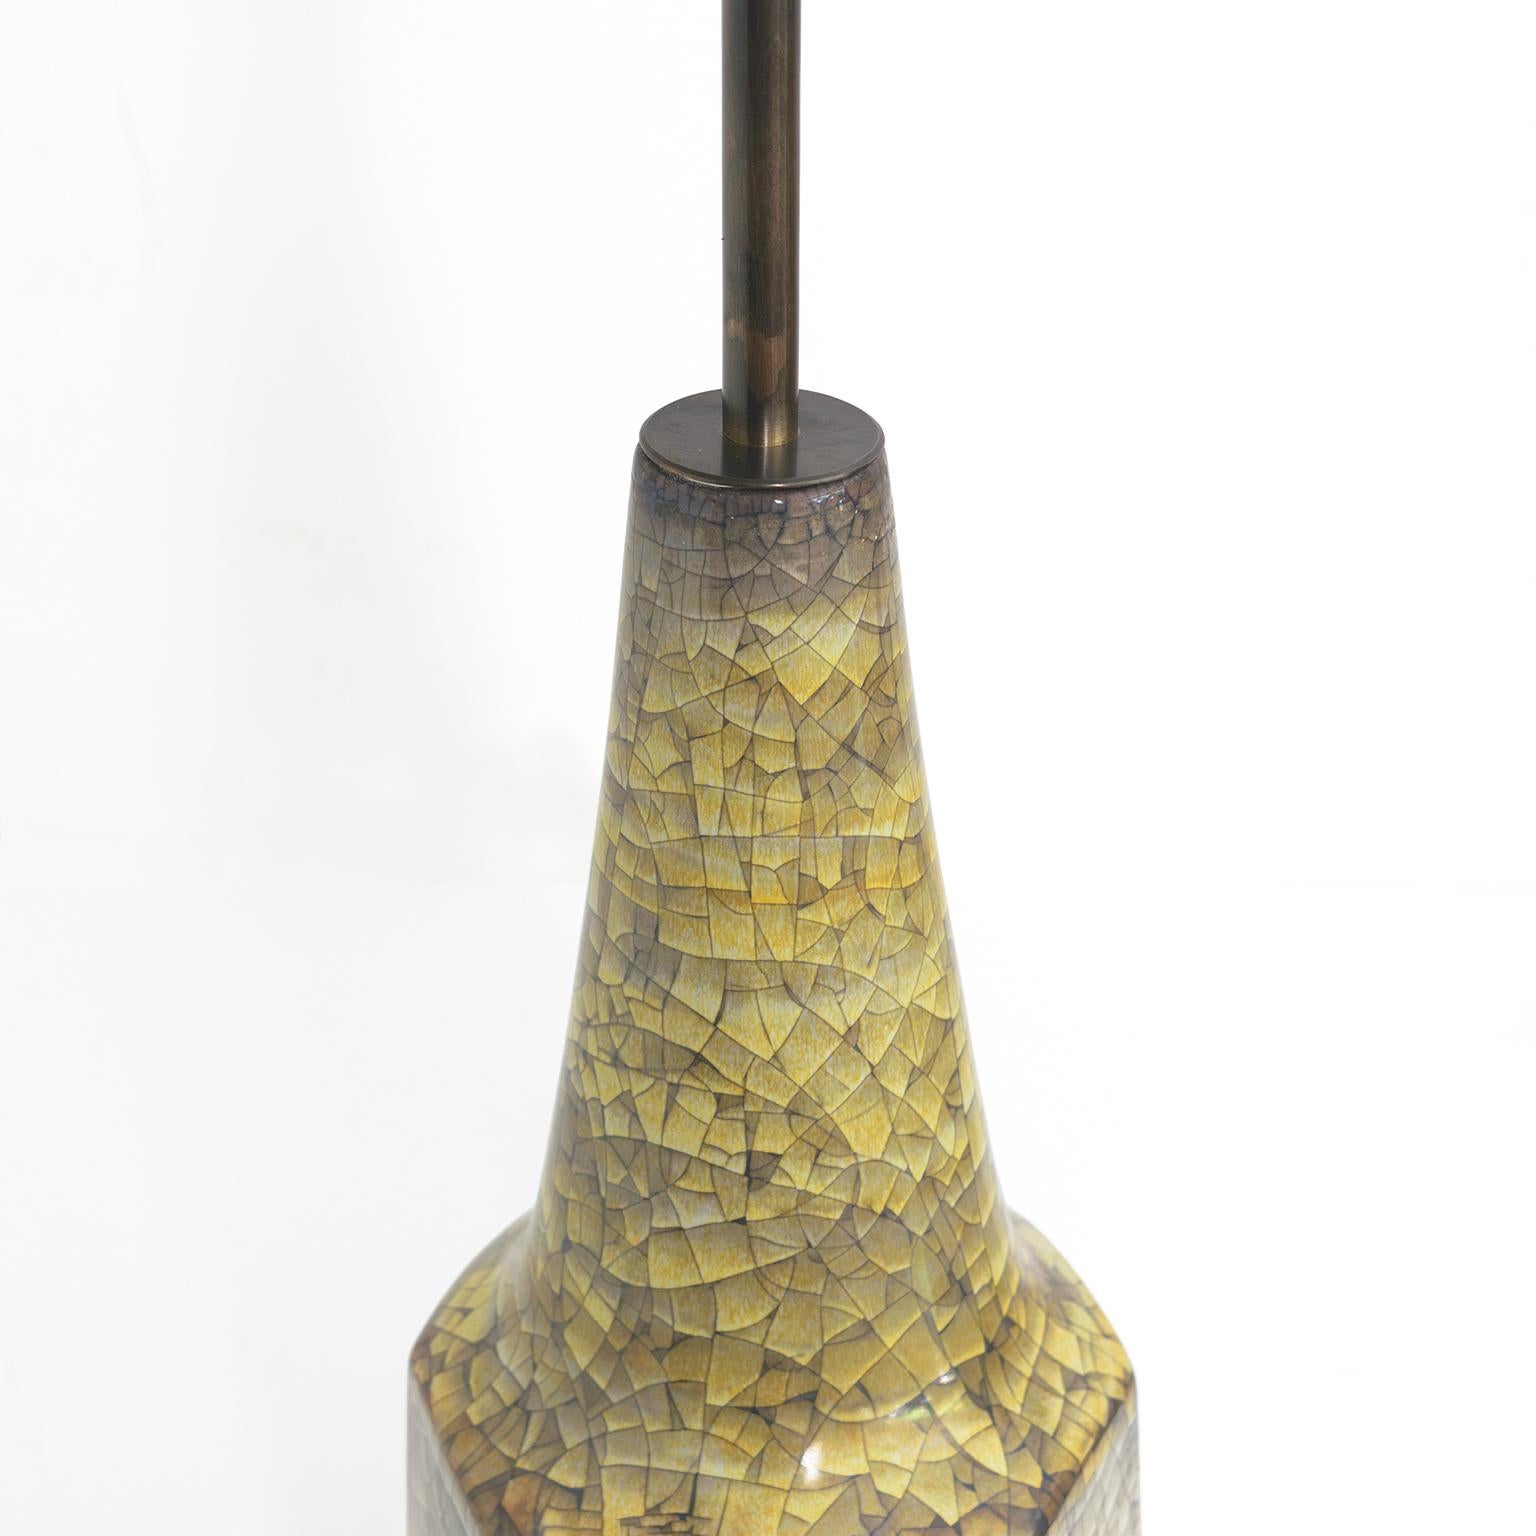 Scandinavian Michael Andersen & Son Crackle Glazed Lamp, 1950's Bornholm, Denmark, 1950